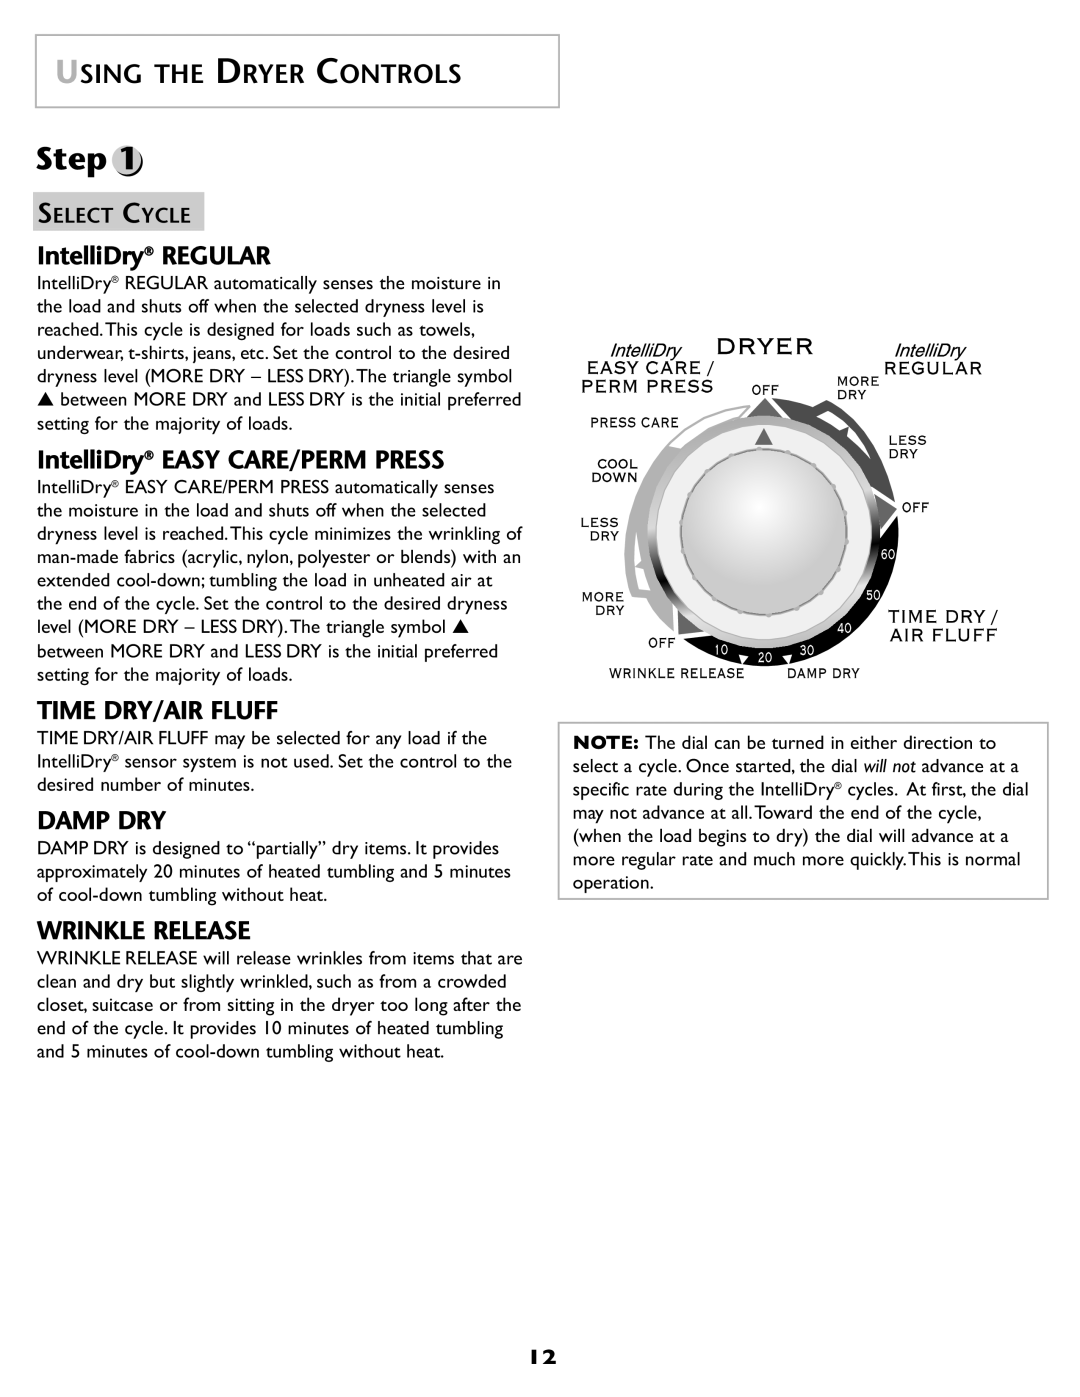 Maytag SL-3 Using The Dryer Controls, IntelliDry REGULAR, IntelliDry EASY CARE/PERM PRESS, Time Dry/Air Fluff, Damp Dry 